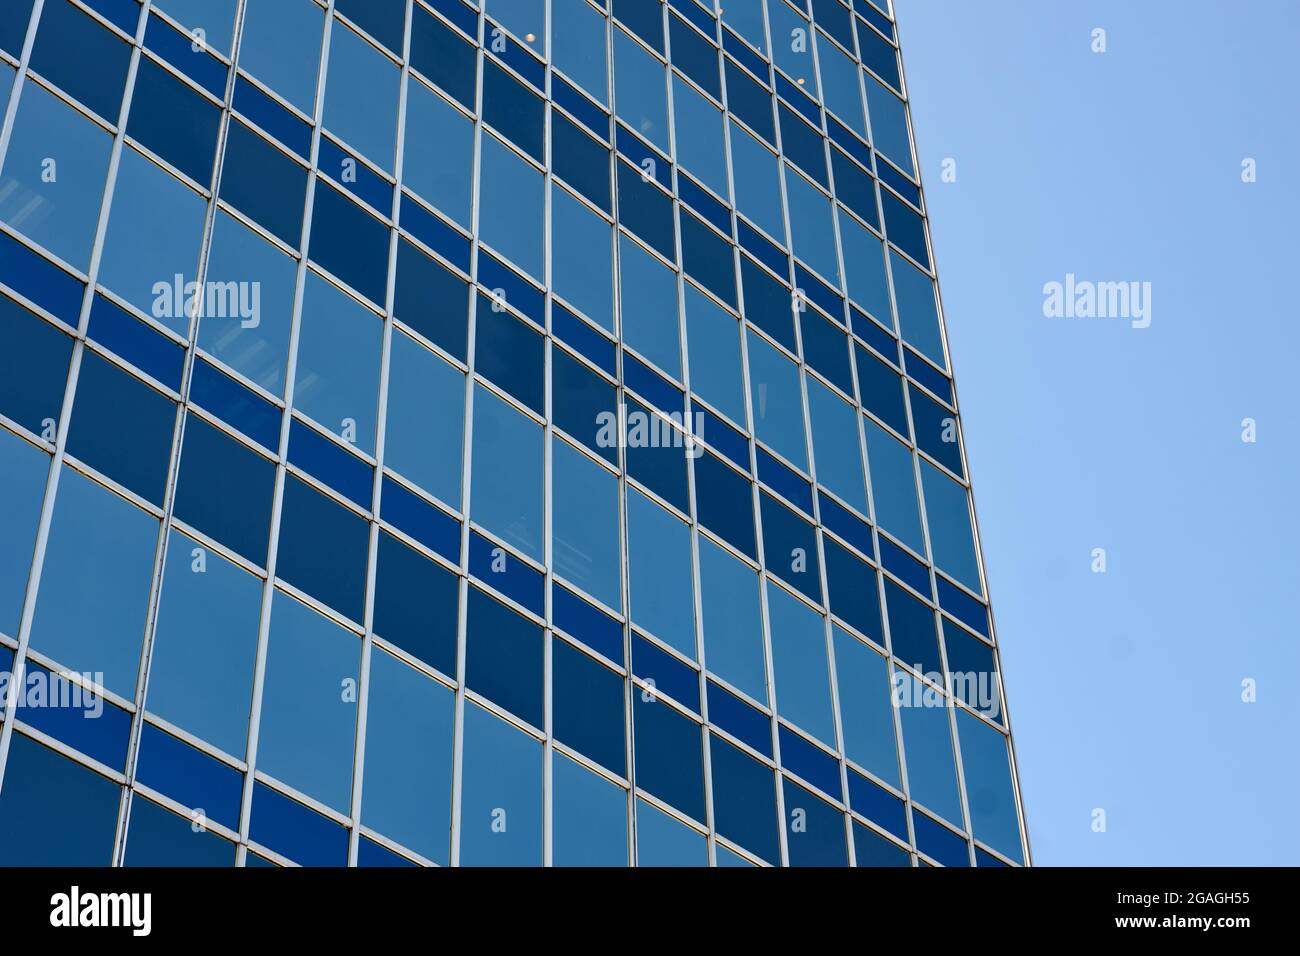 Blue glass facade of an office building Stock Photo